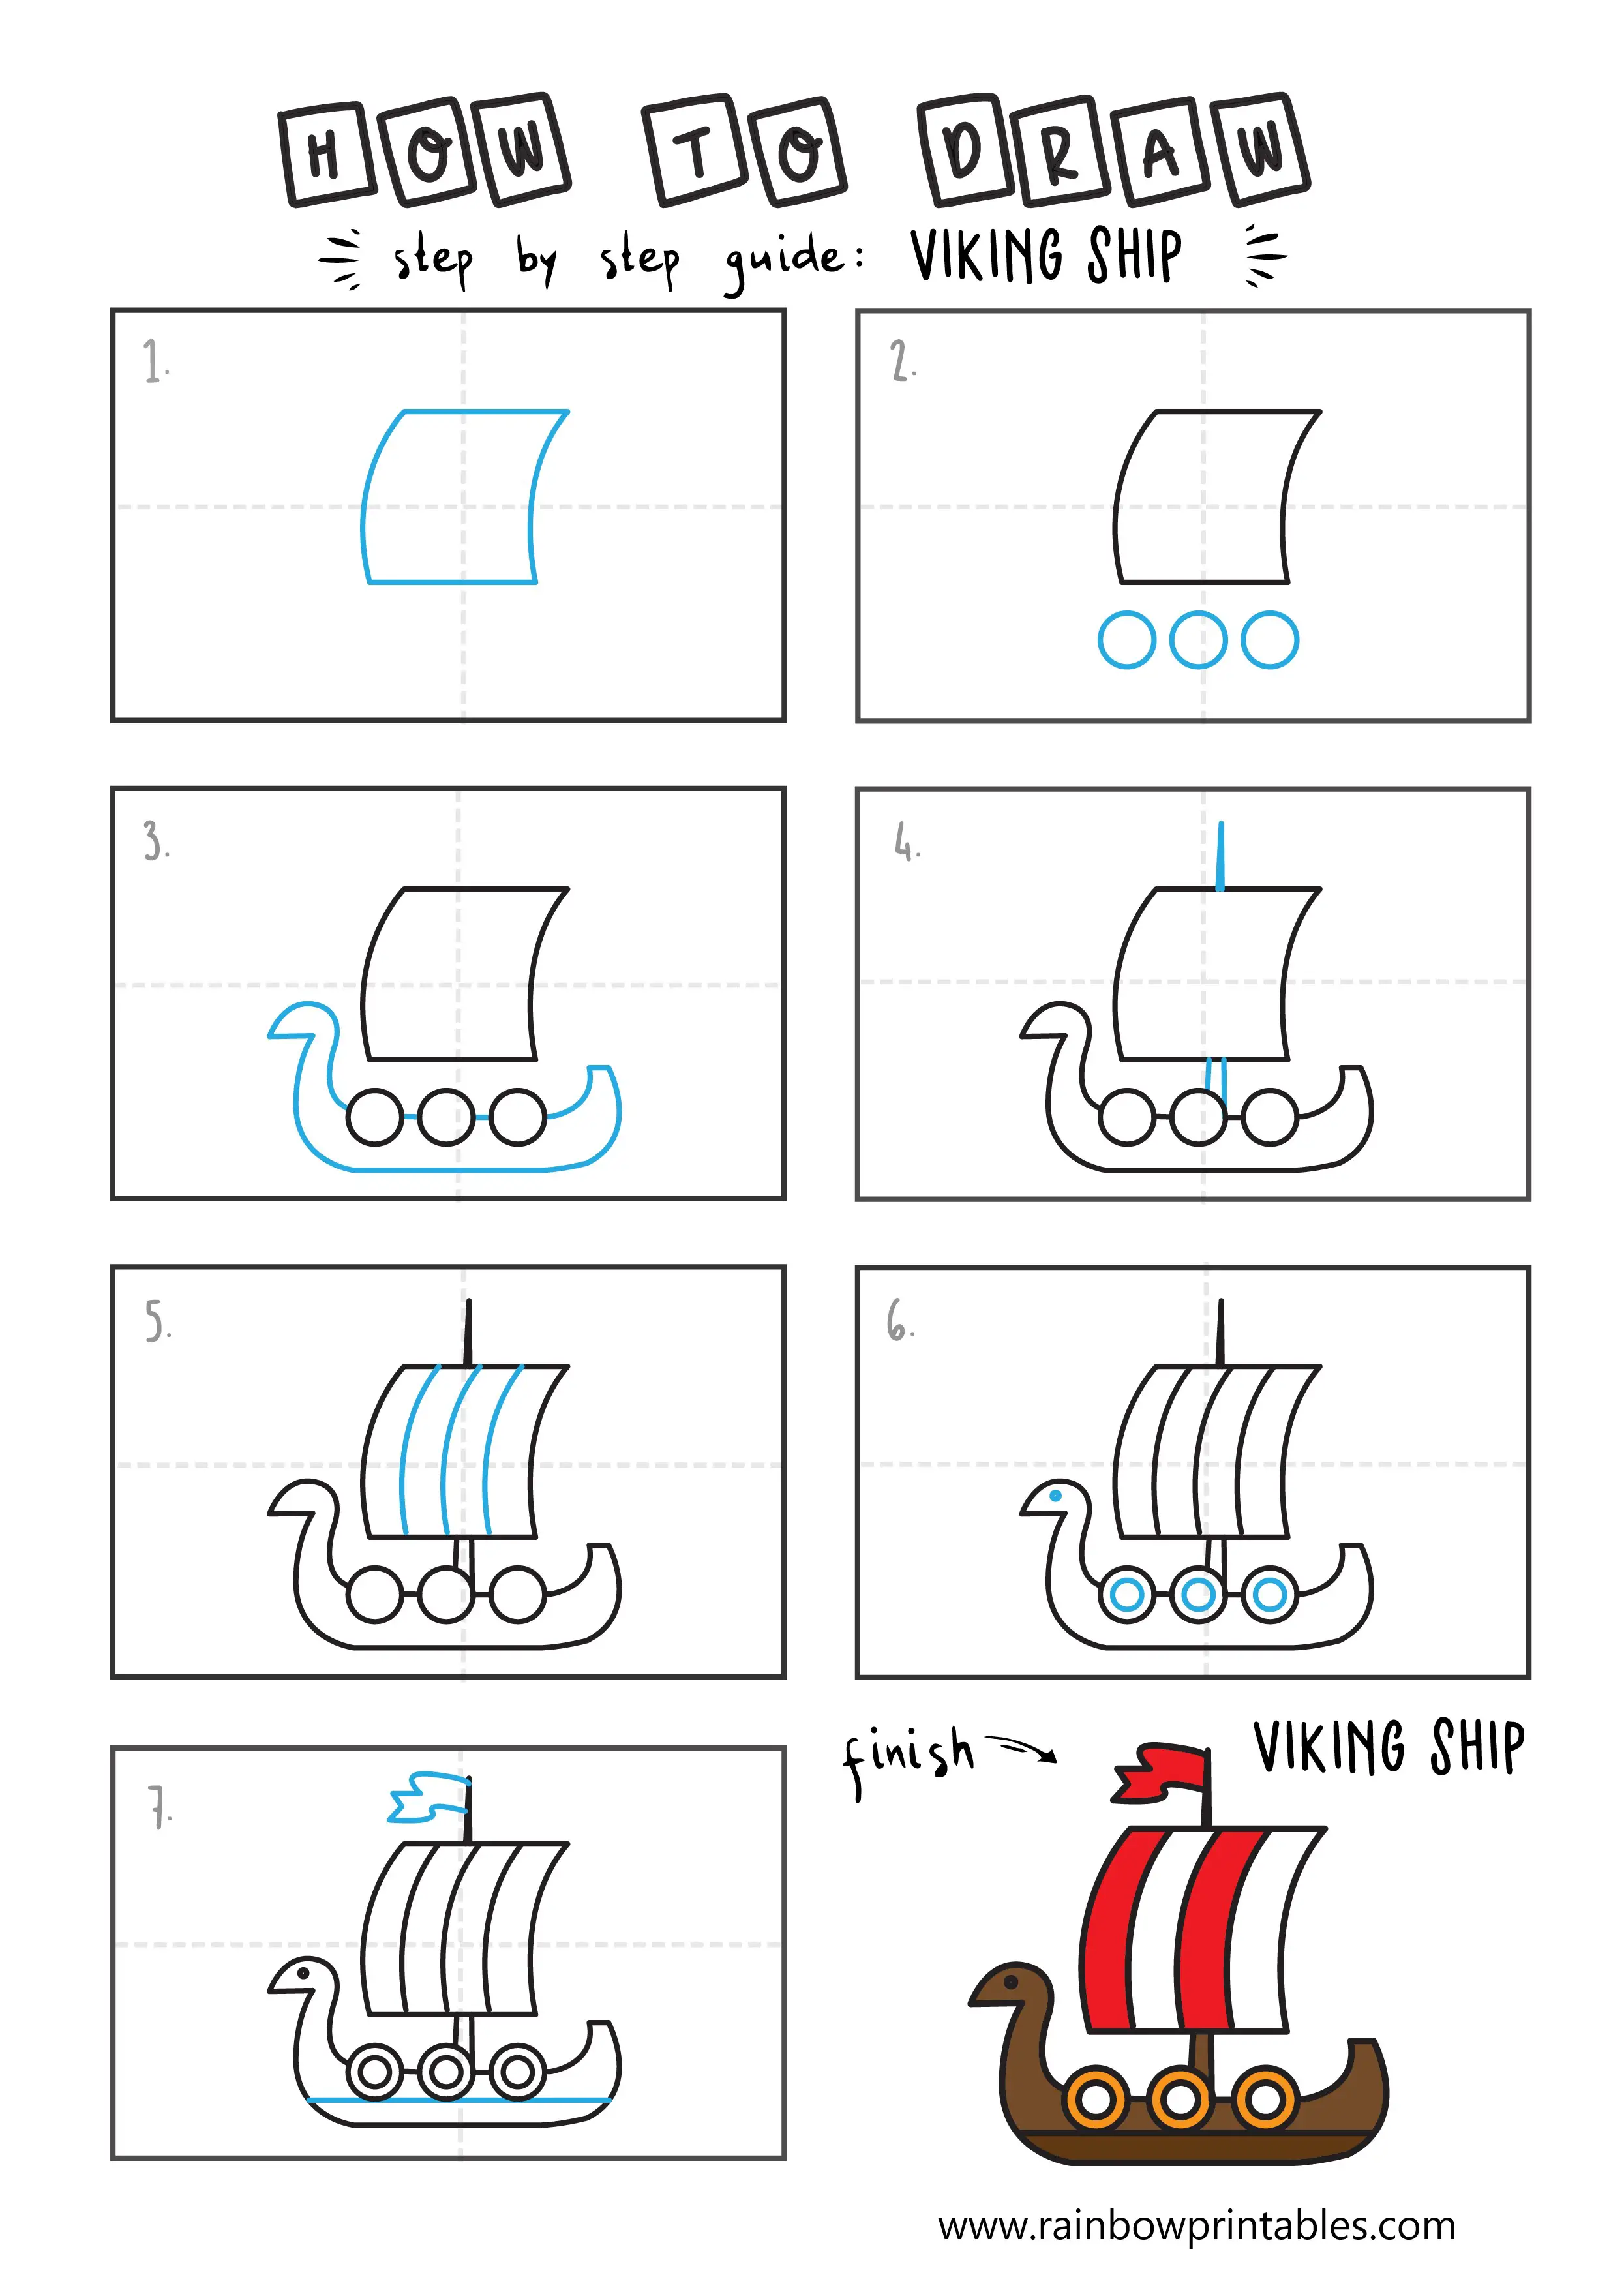 How To Draw a Cartoon Viking Boat (Longship) Rainbow Printables